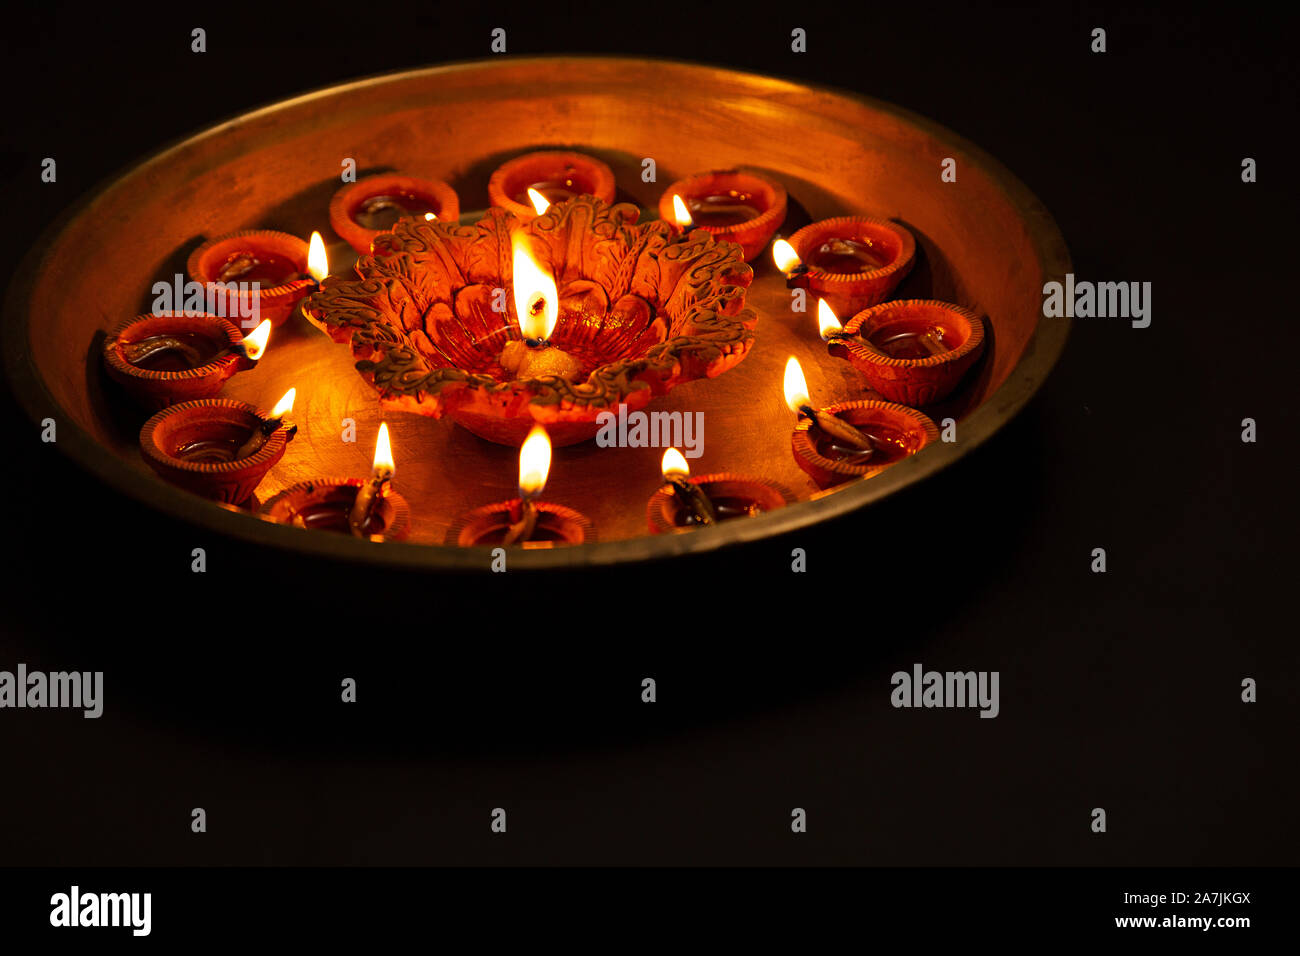 Abundance Diyas In-Plate Lighting During Diwali Festival Celebration nobody Stock Photo